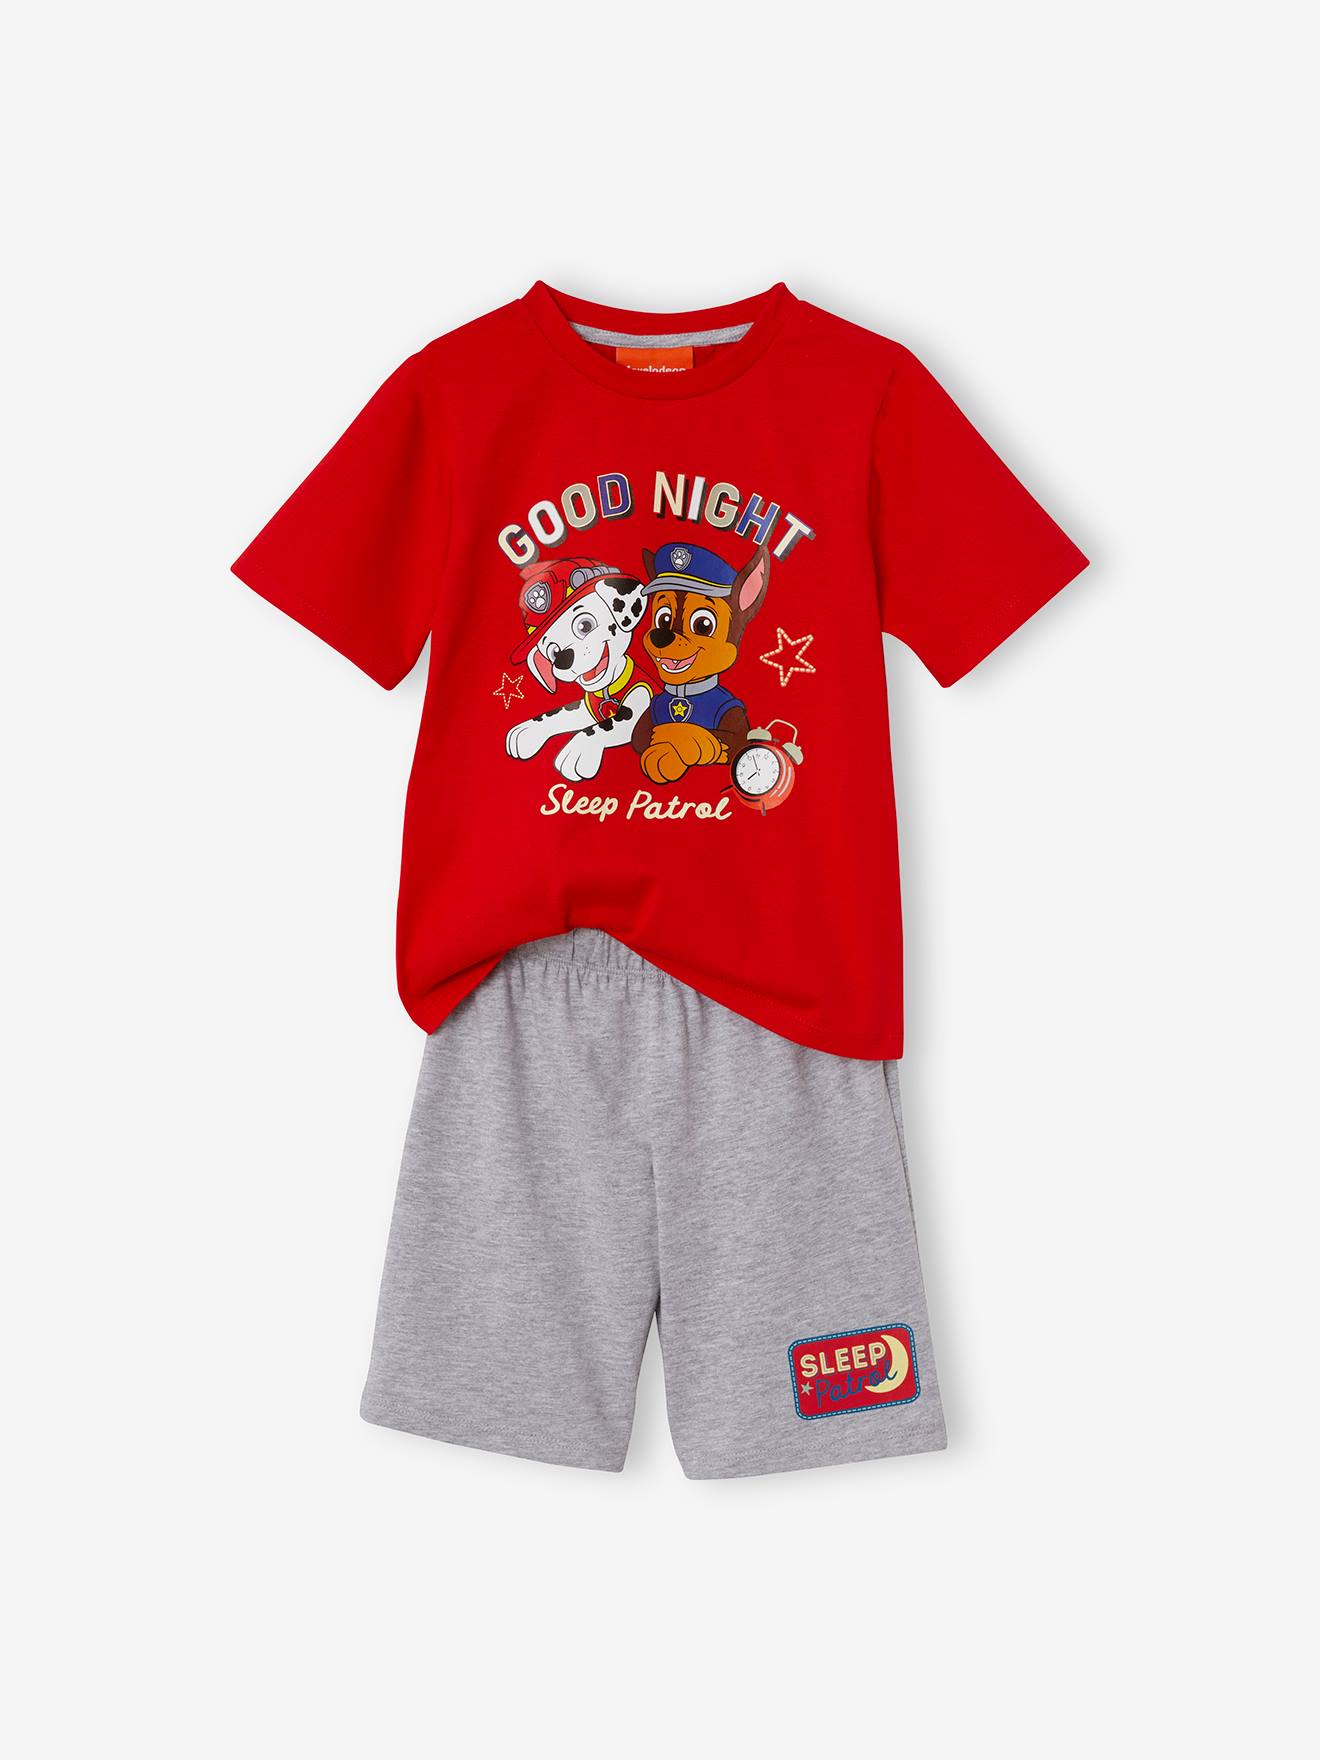 Paw Patrol(r) Short Pyjamas for Boys red bright solid with desig